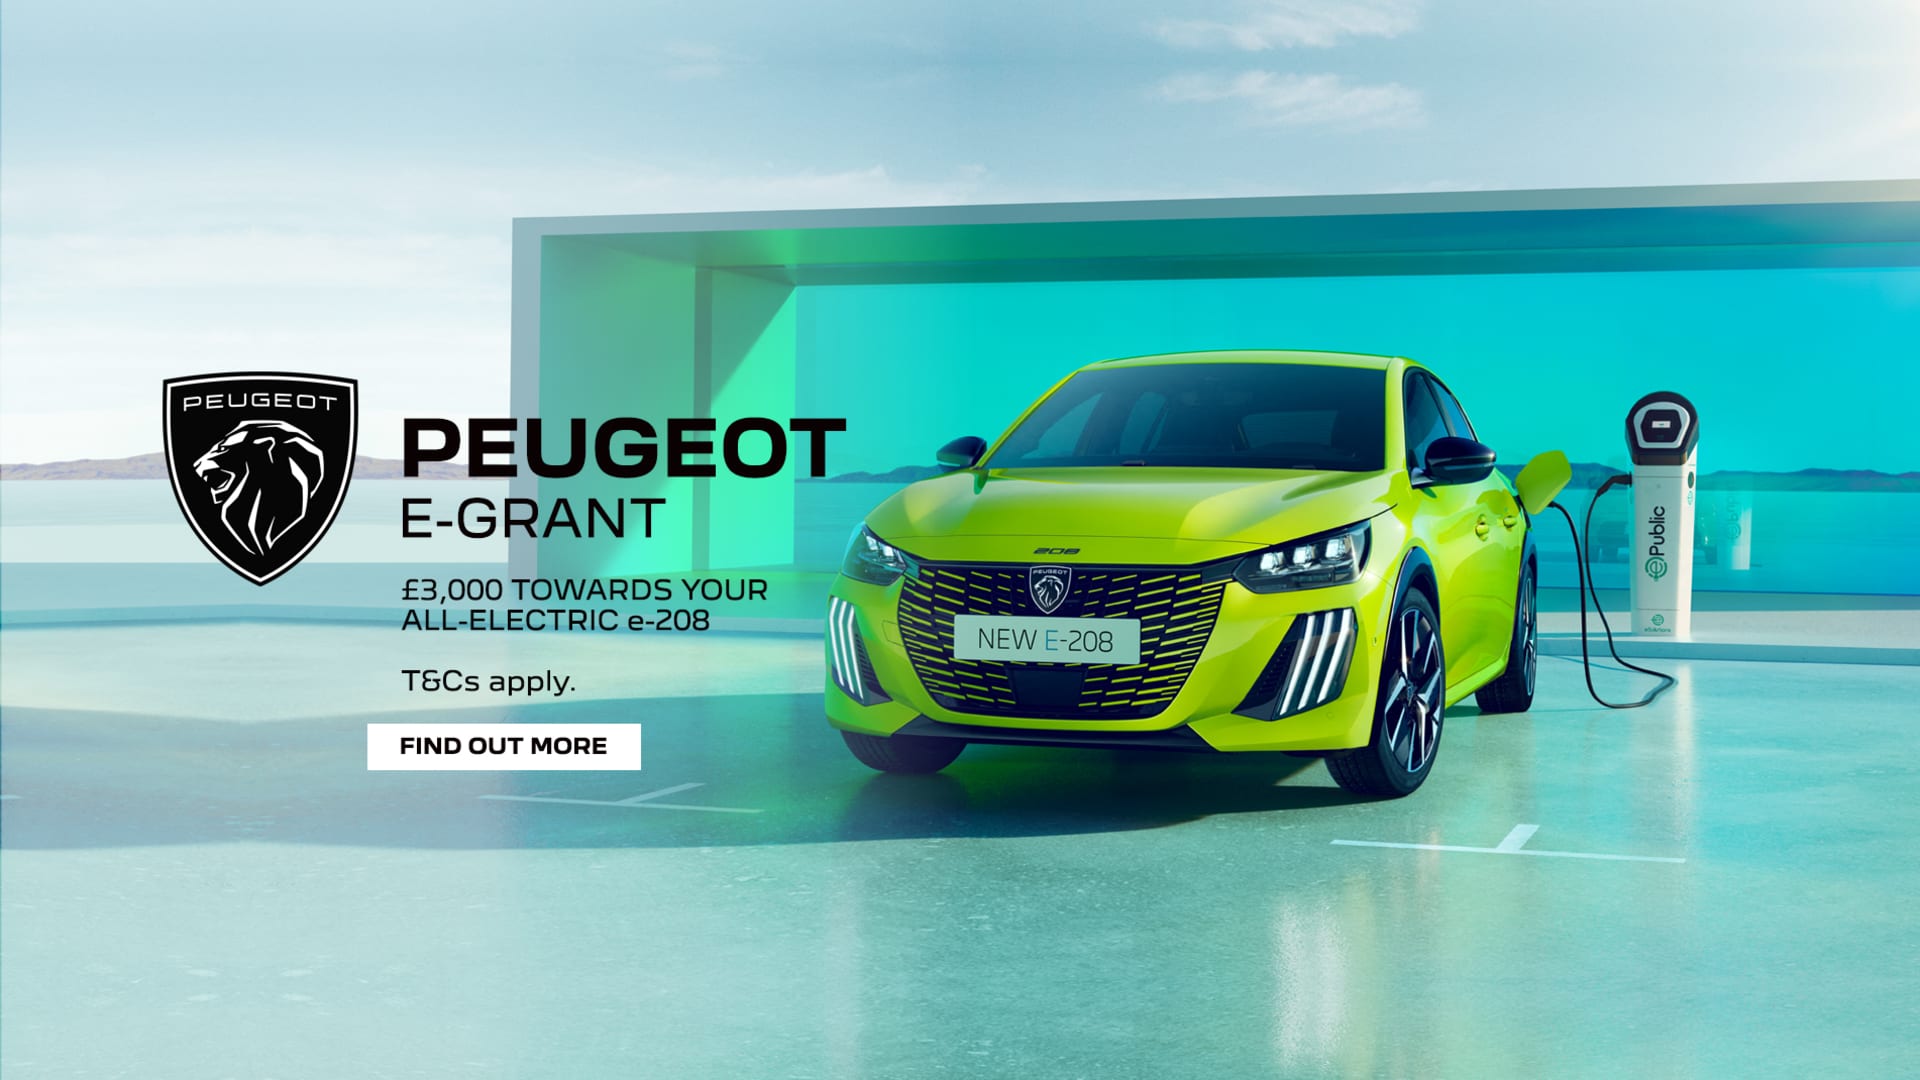 Peugeot E-tech £3000 Q3